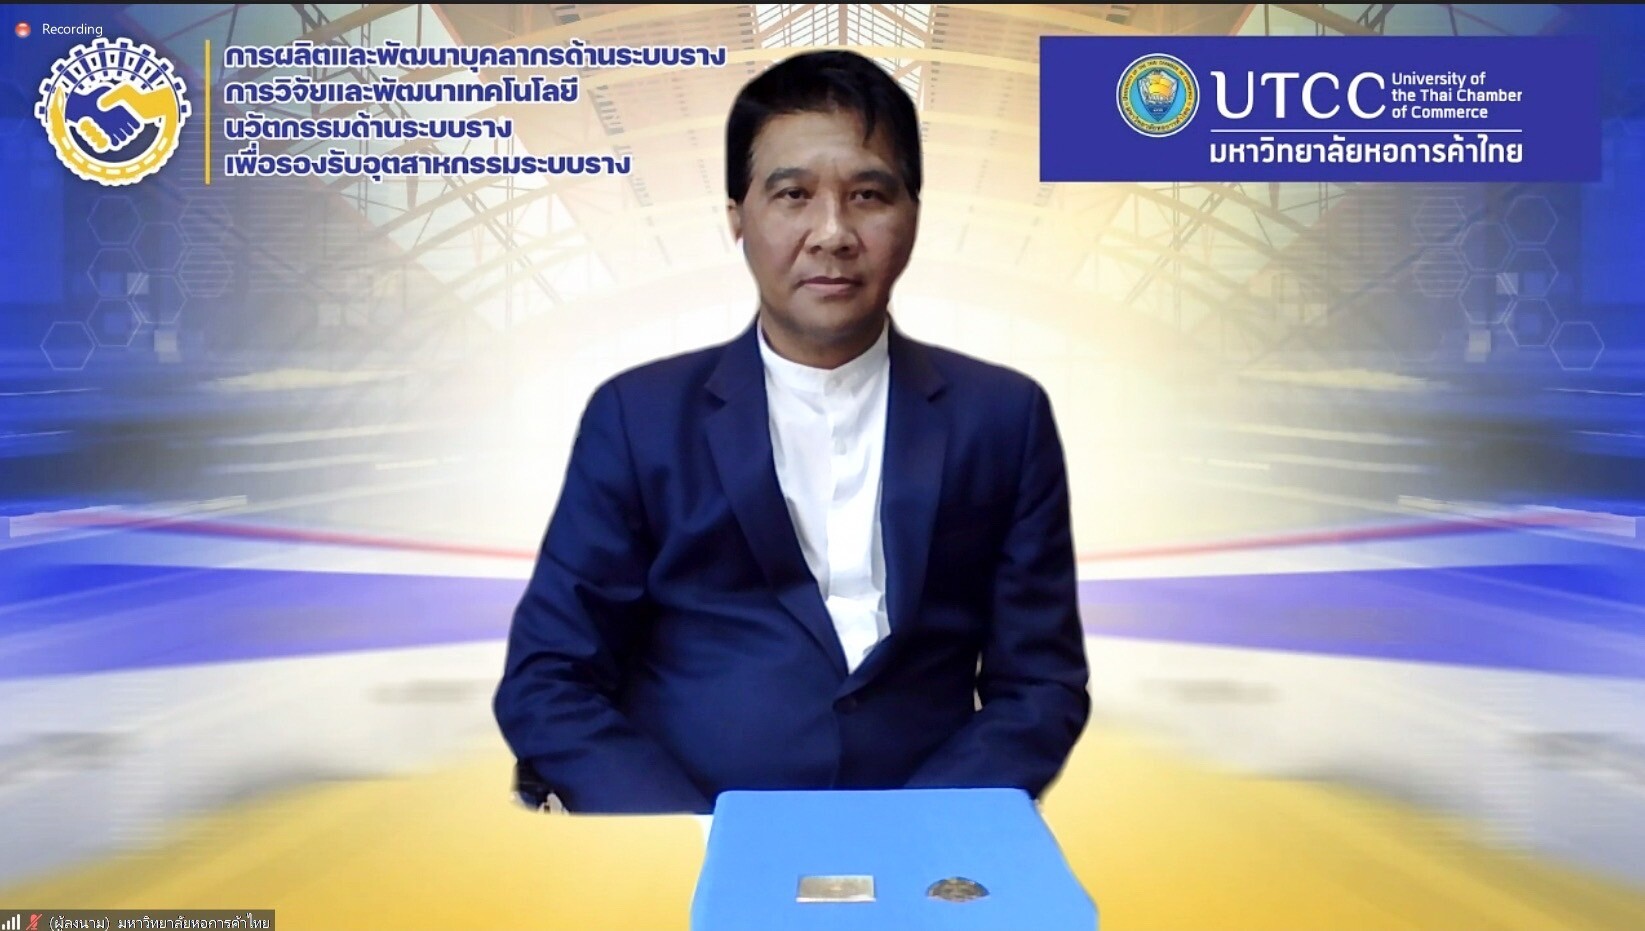 UTCC ร่วมผลิตและพัฒนาบุคลากร รองรับอุตสาหกรรมระบบรางของประเทศไทย